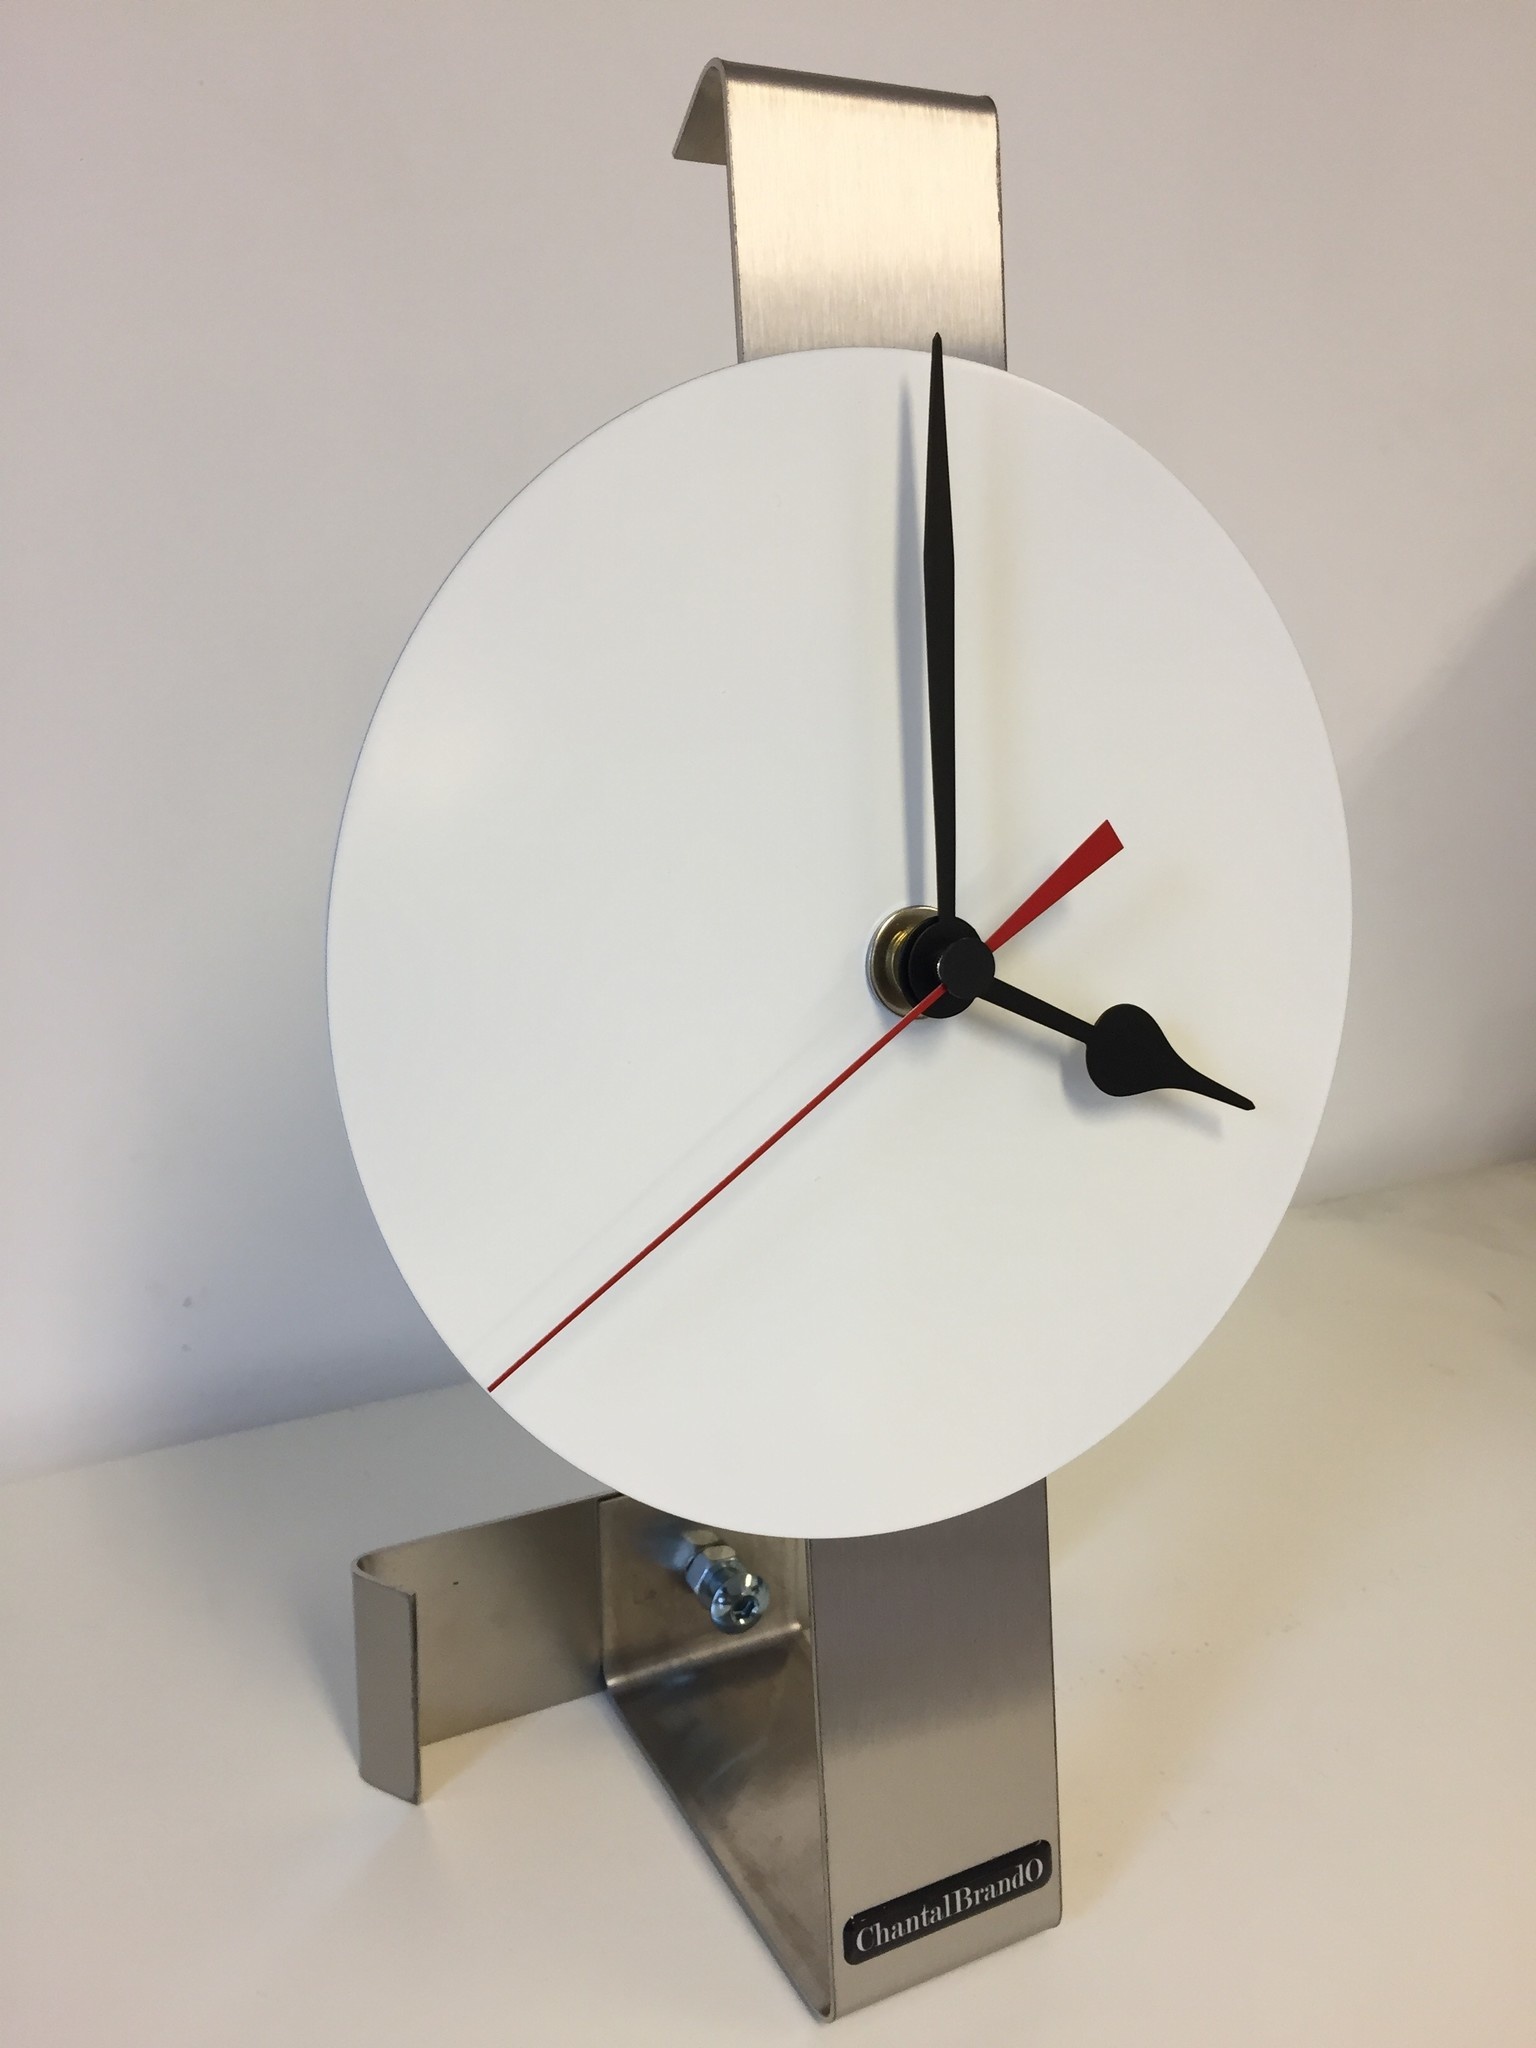 ChantalBrandO Design - Table clock White Spirit - Red Pointer - Modern Dutch Design